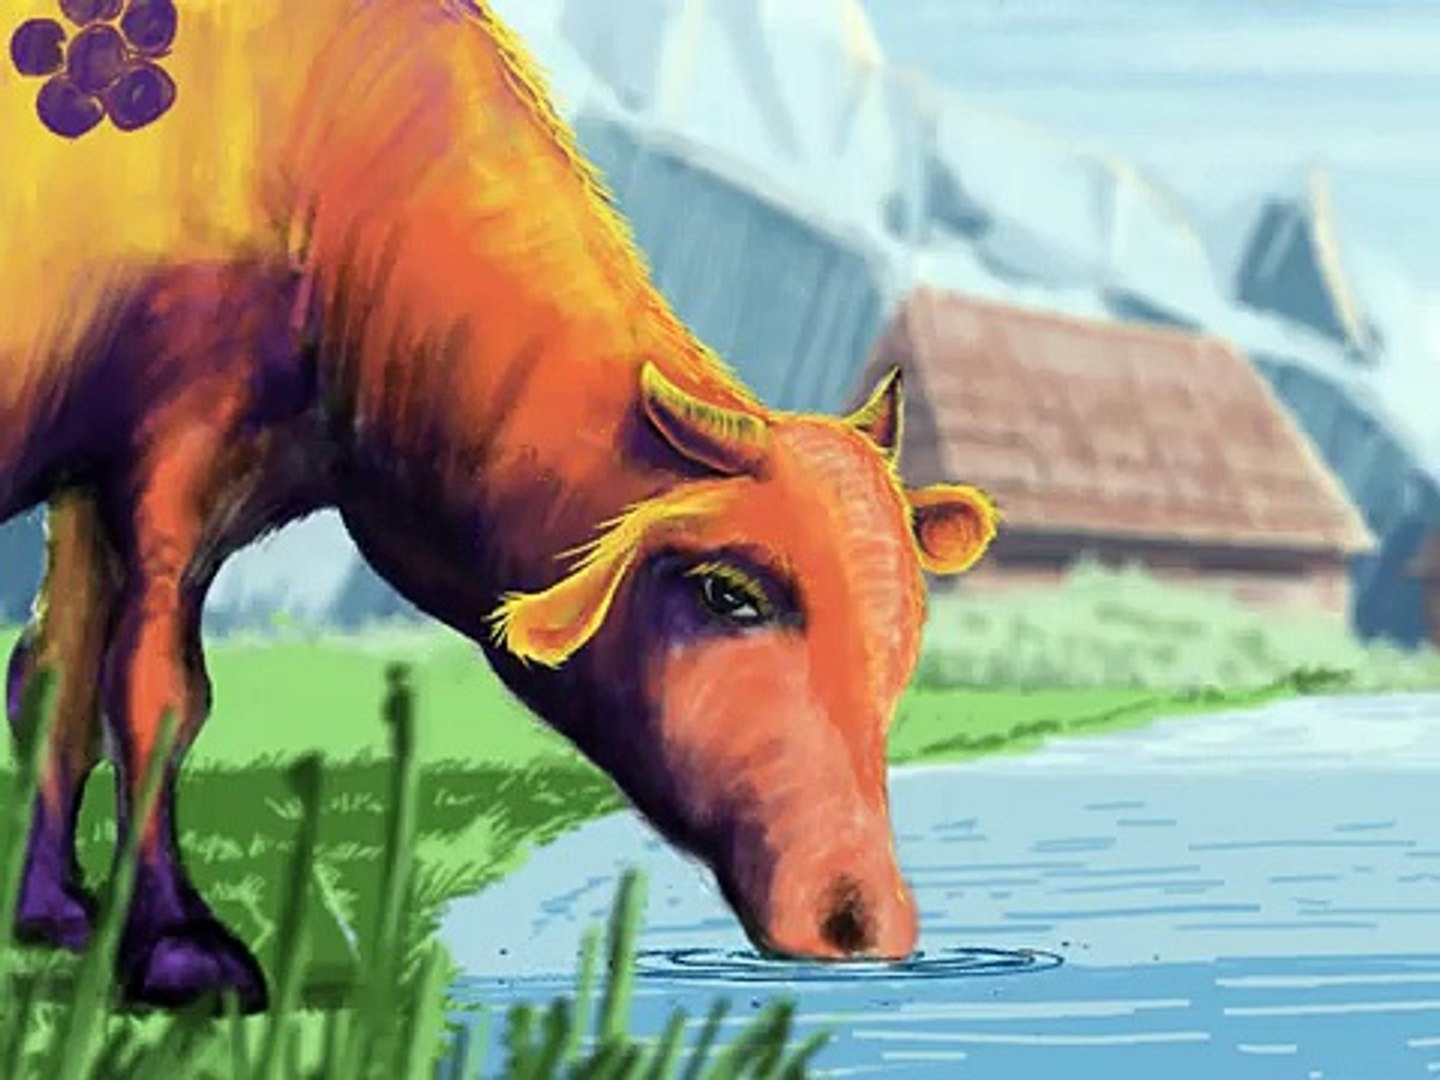 Cudotvorno mlijeko (Wondermilk) - a short animated film by Ivan Ramadan (Bosnian version)